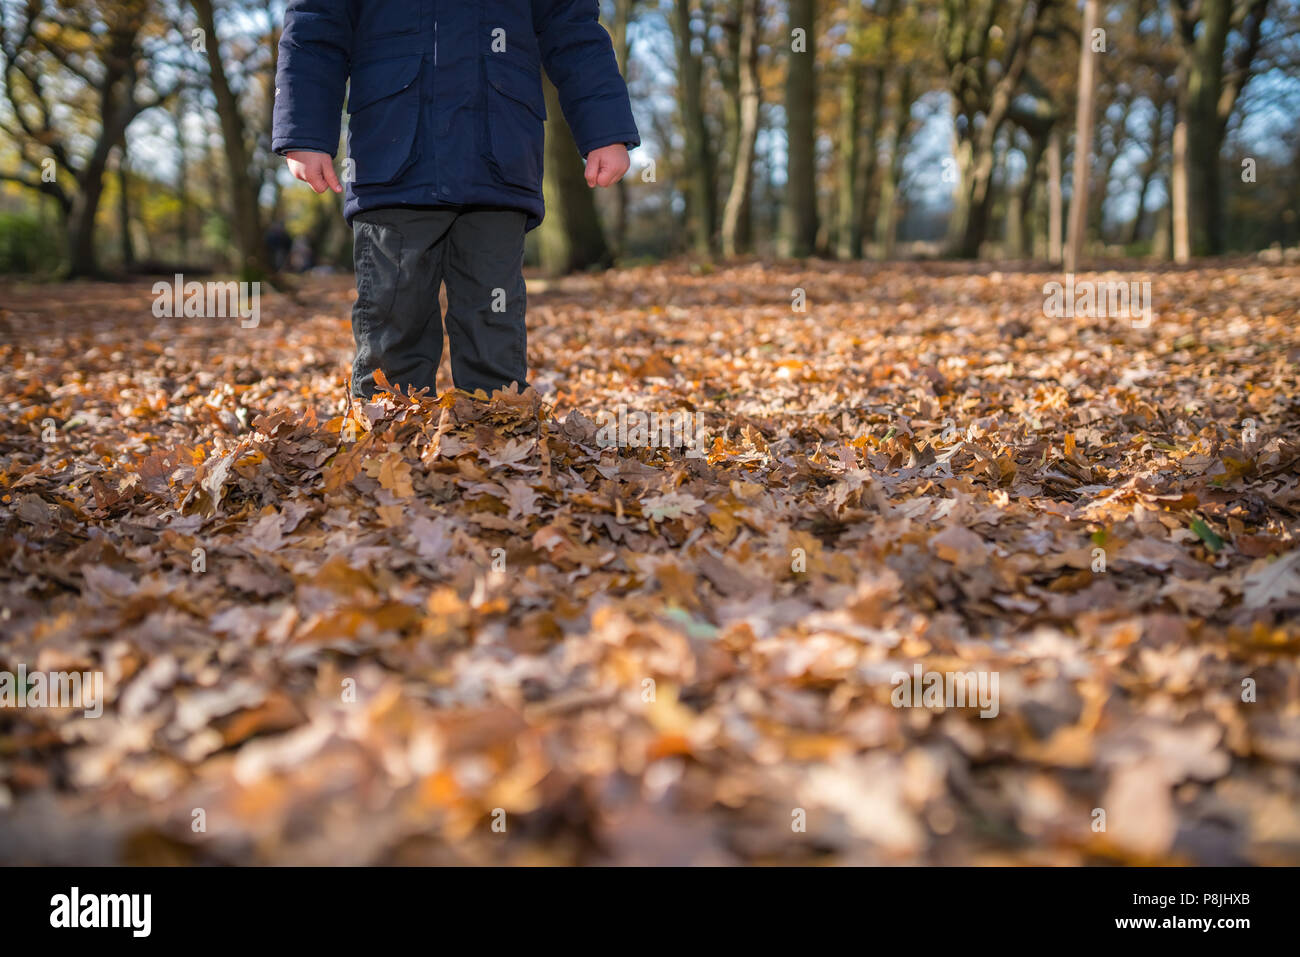 boy-standing-deep-in-the-fallen-leaves-in-autumn-in-a-forest-P8JHXB.jpg